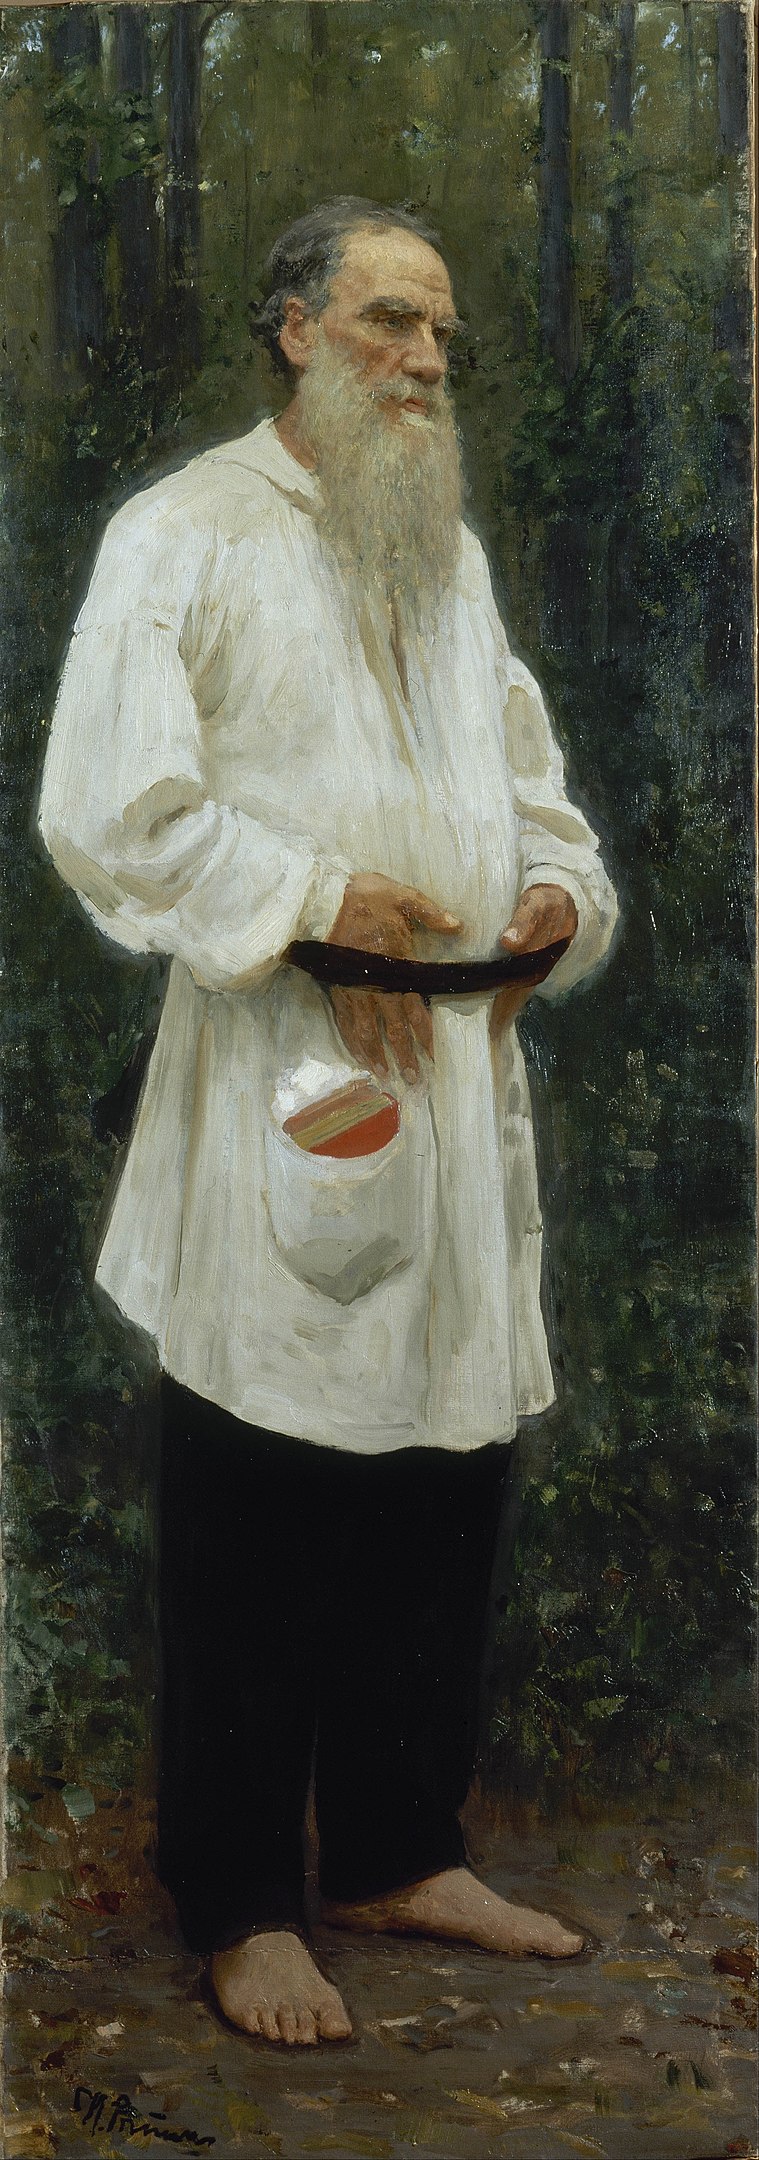 Ilya Repin - Leo Tolstoy Barefoot